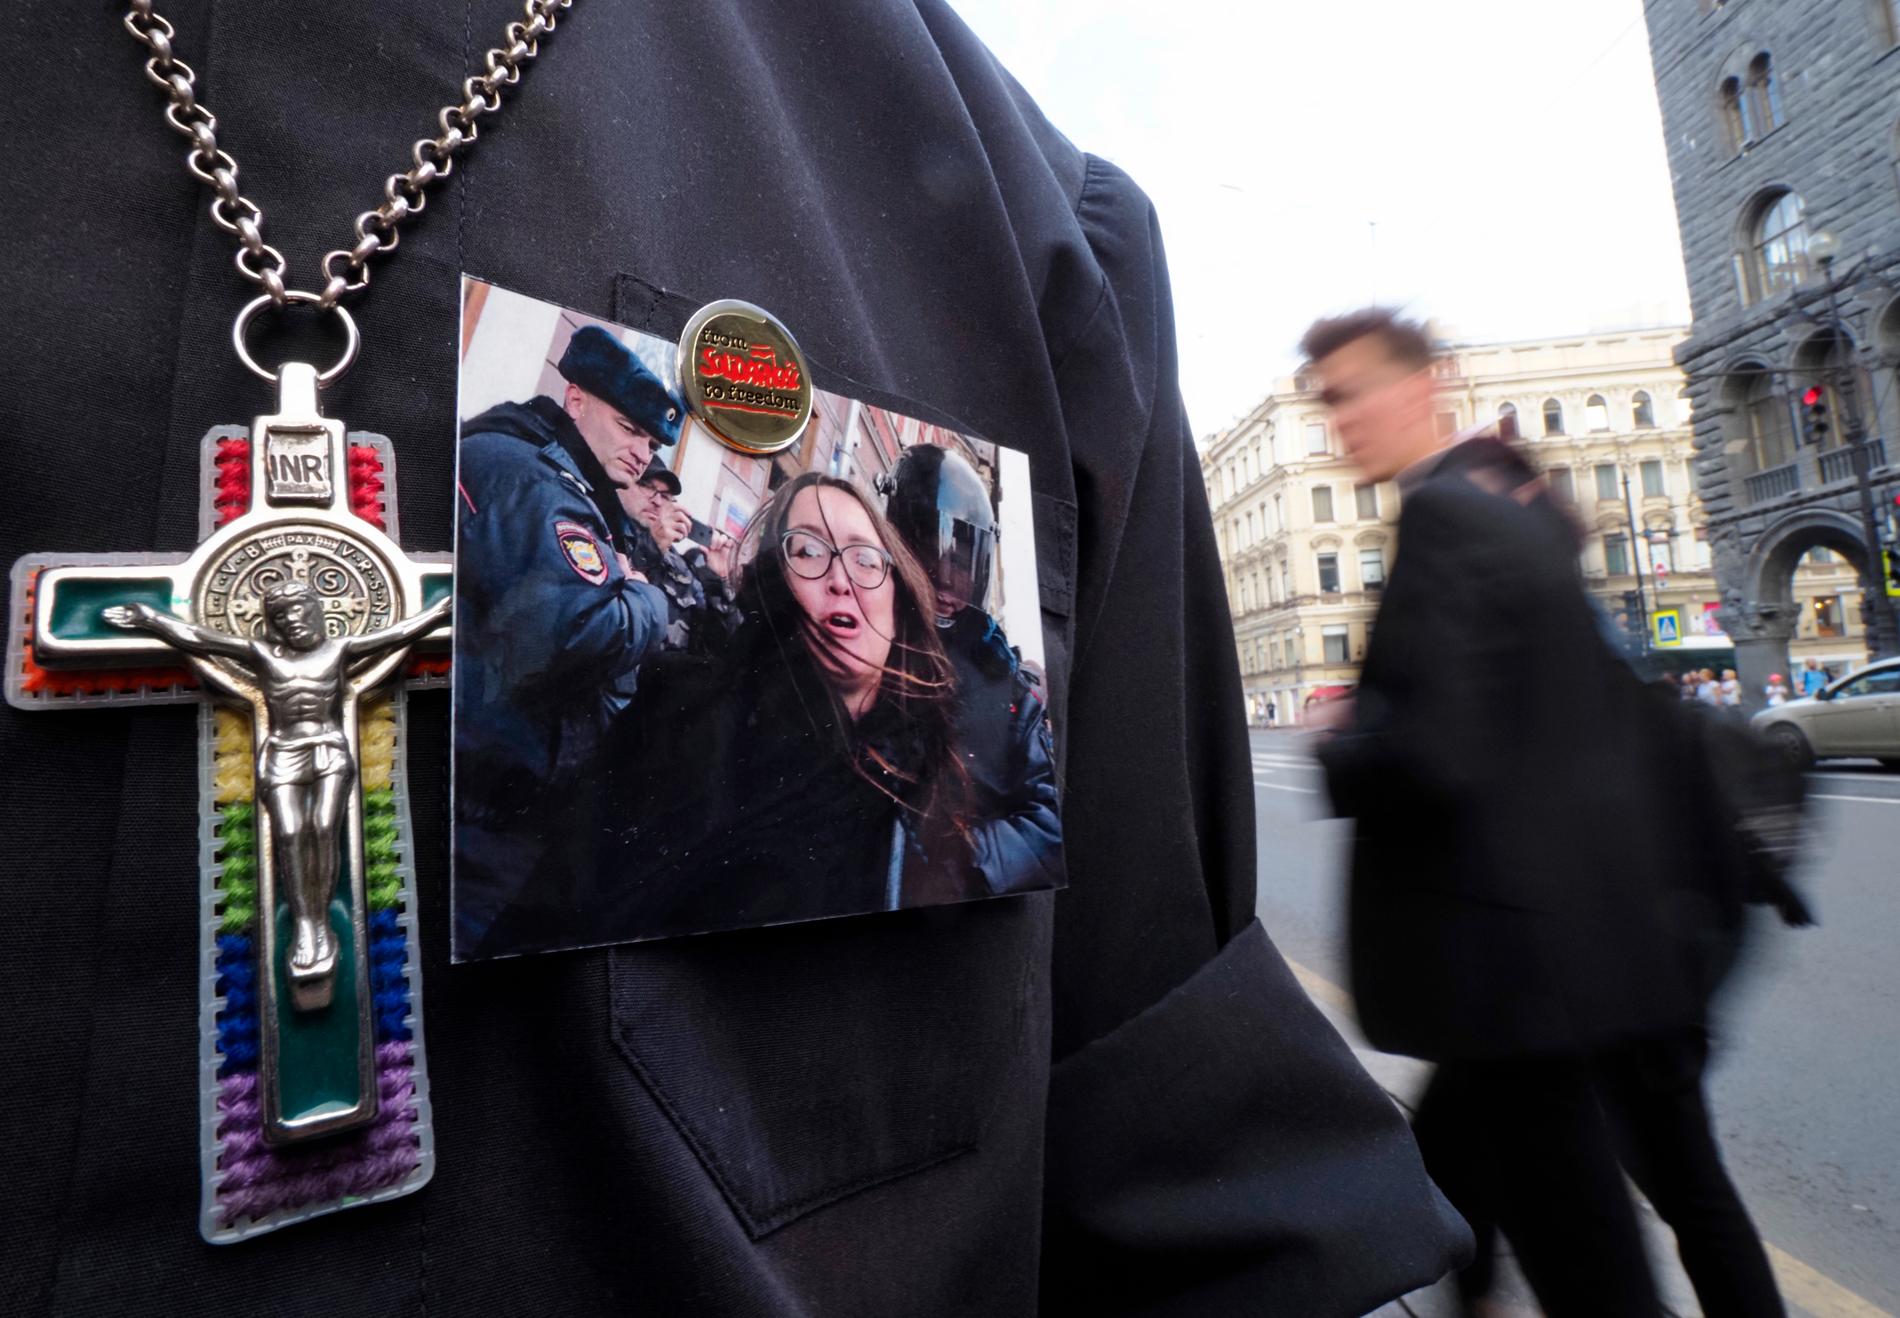 En bild av mördade Jelena Grigorjeva pryder ett skjortslag under en sorgemanifestation i Sankt Petersburg.